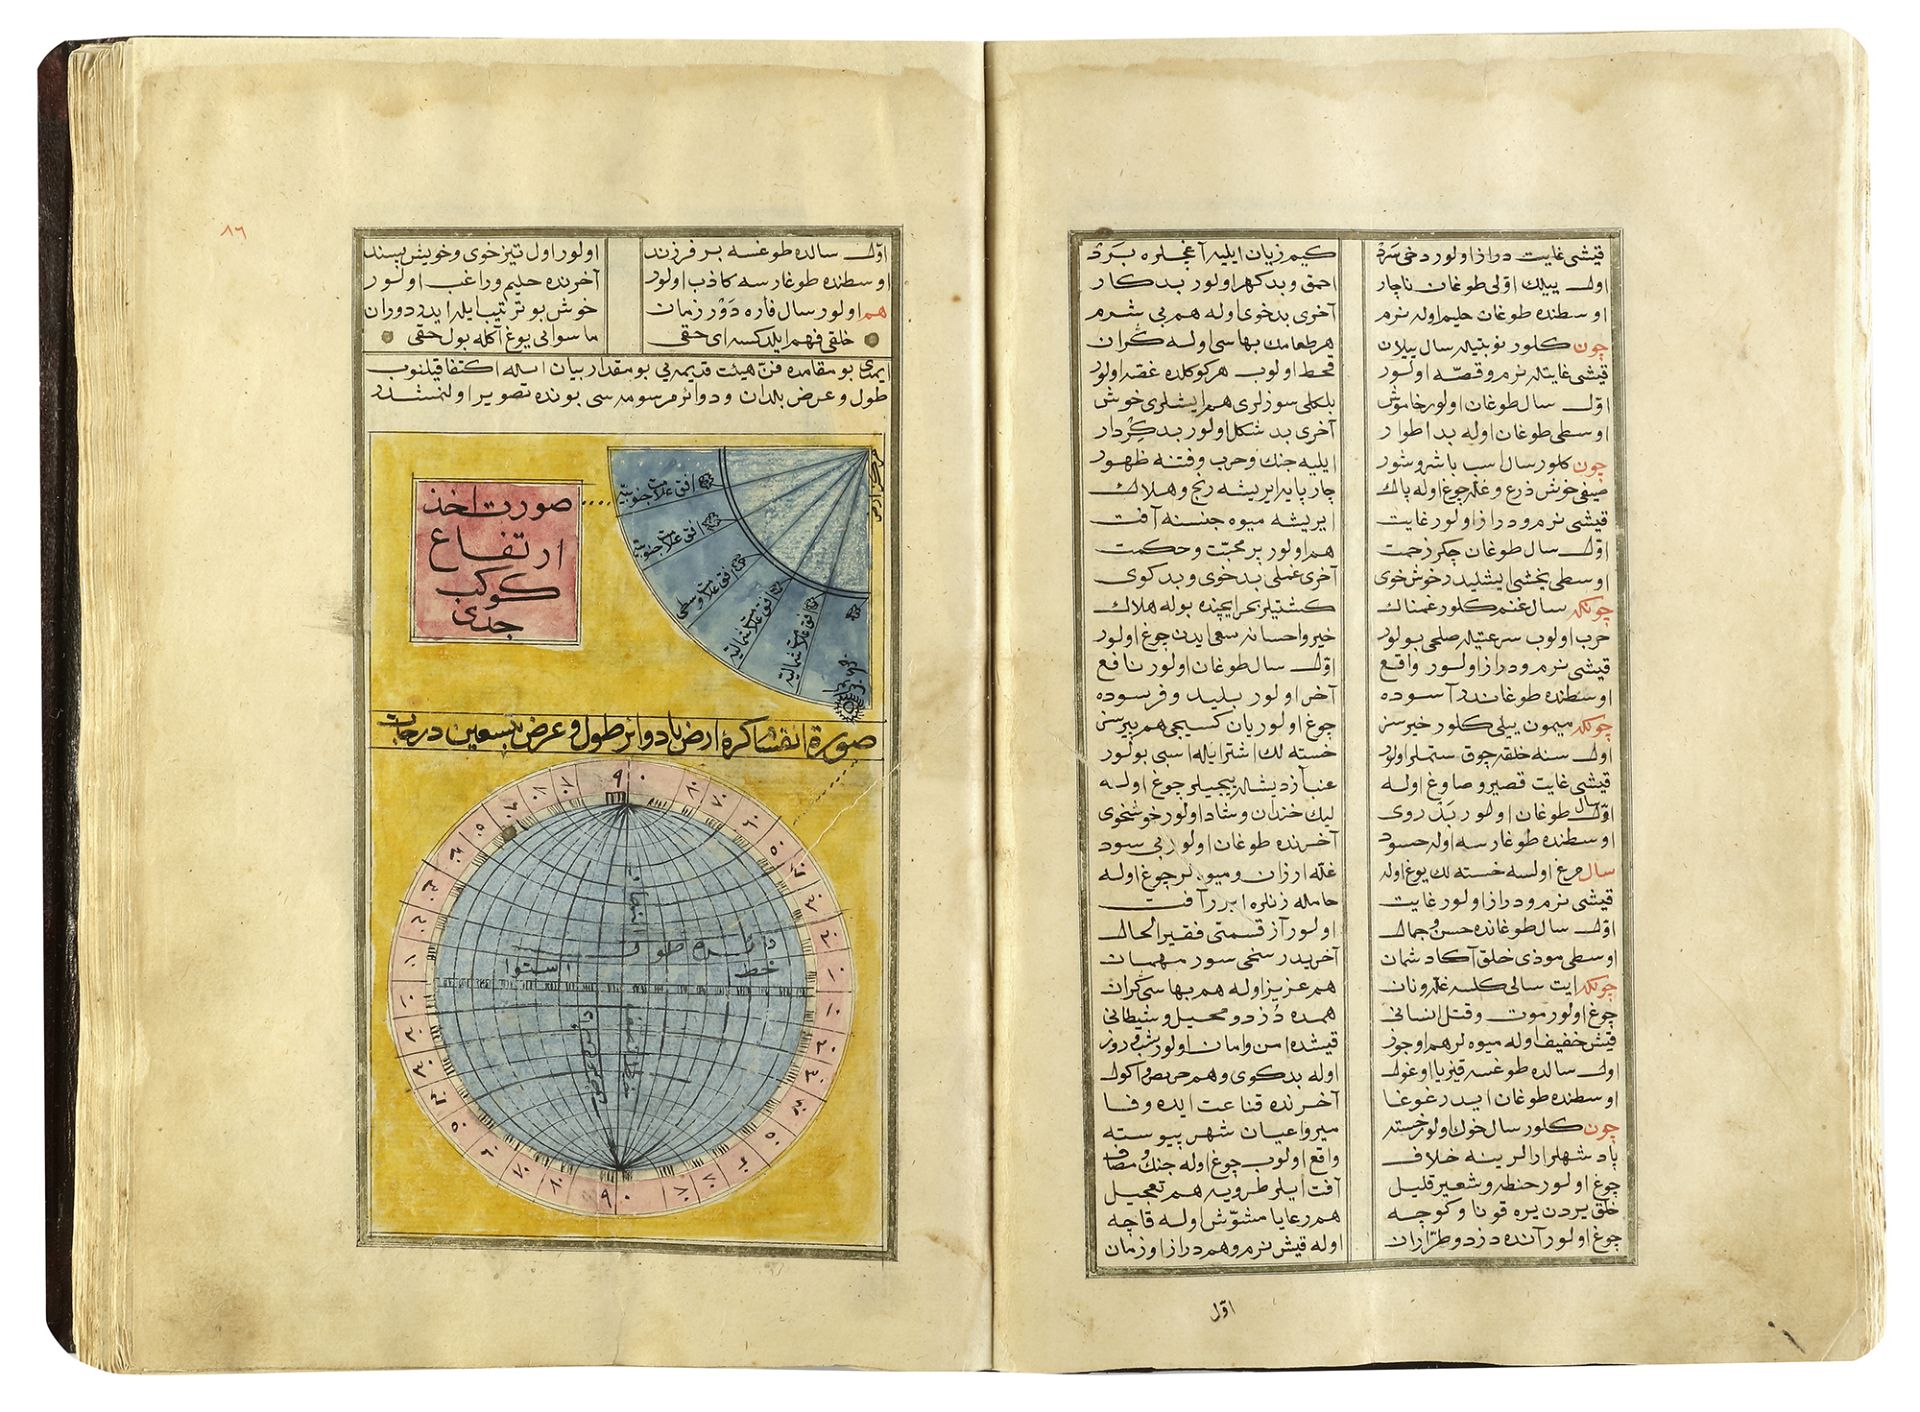 MARIFETNAME, IBRAHIM HAKKI, COPIED BY SAE'D ALLAH BIN ALI BIN AHMED, TURKEY, 1221 AH/1806 AD - Image 48 of 58